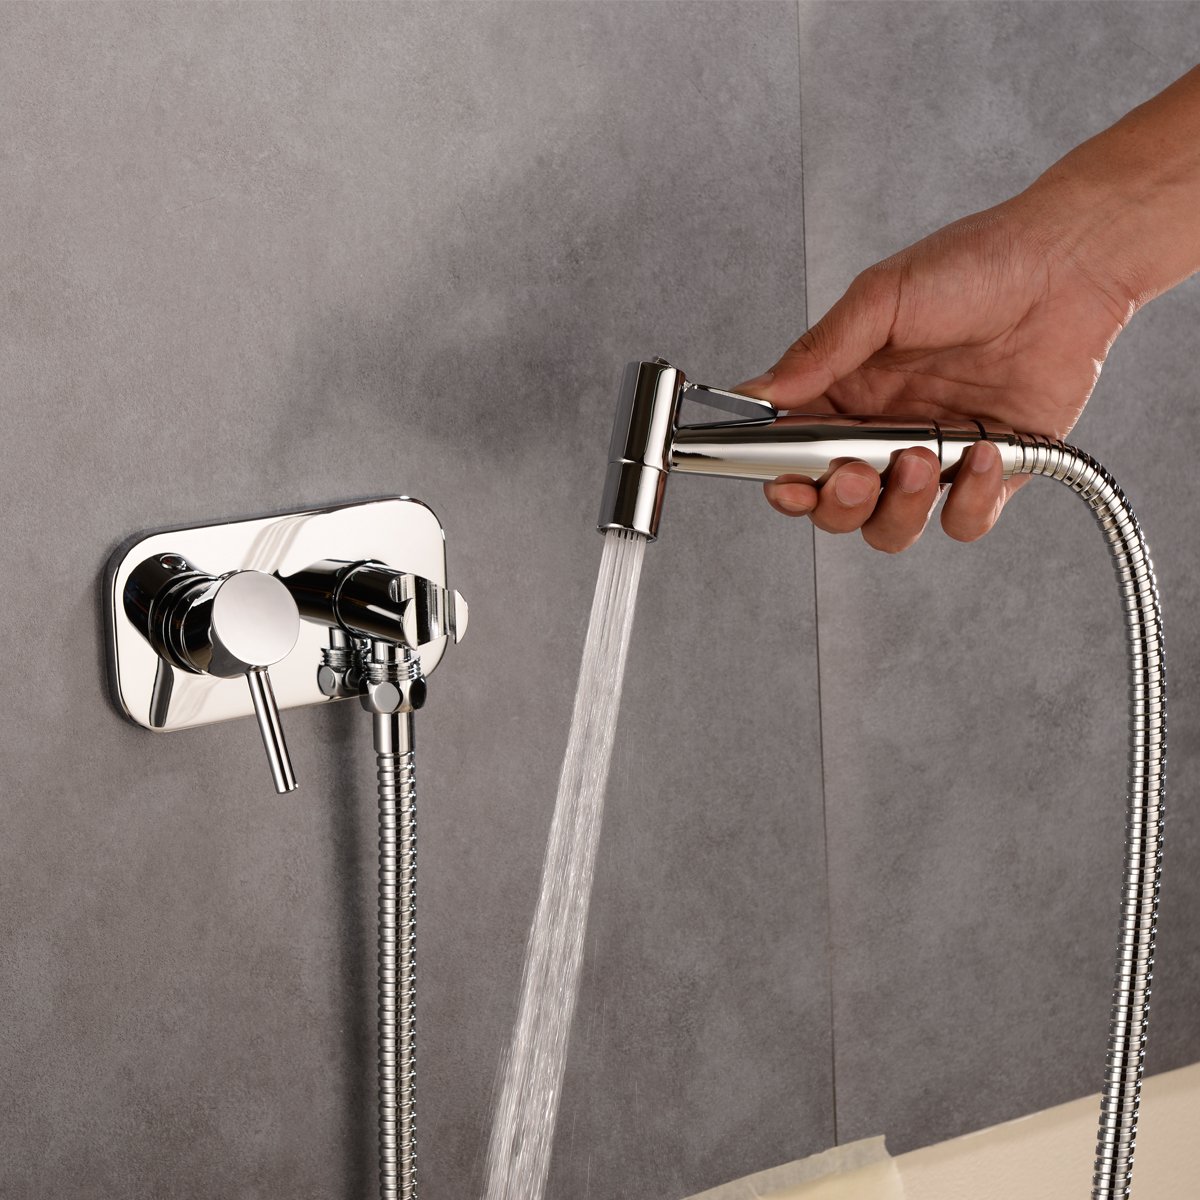 TRUSTMI Toilet Concealed Hot and Cold Bidet Spray Set, Brass Hand Held Warm Water Sprayer Shattaf,Chrome